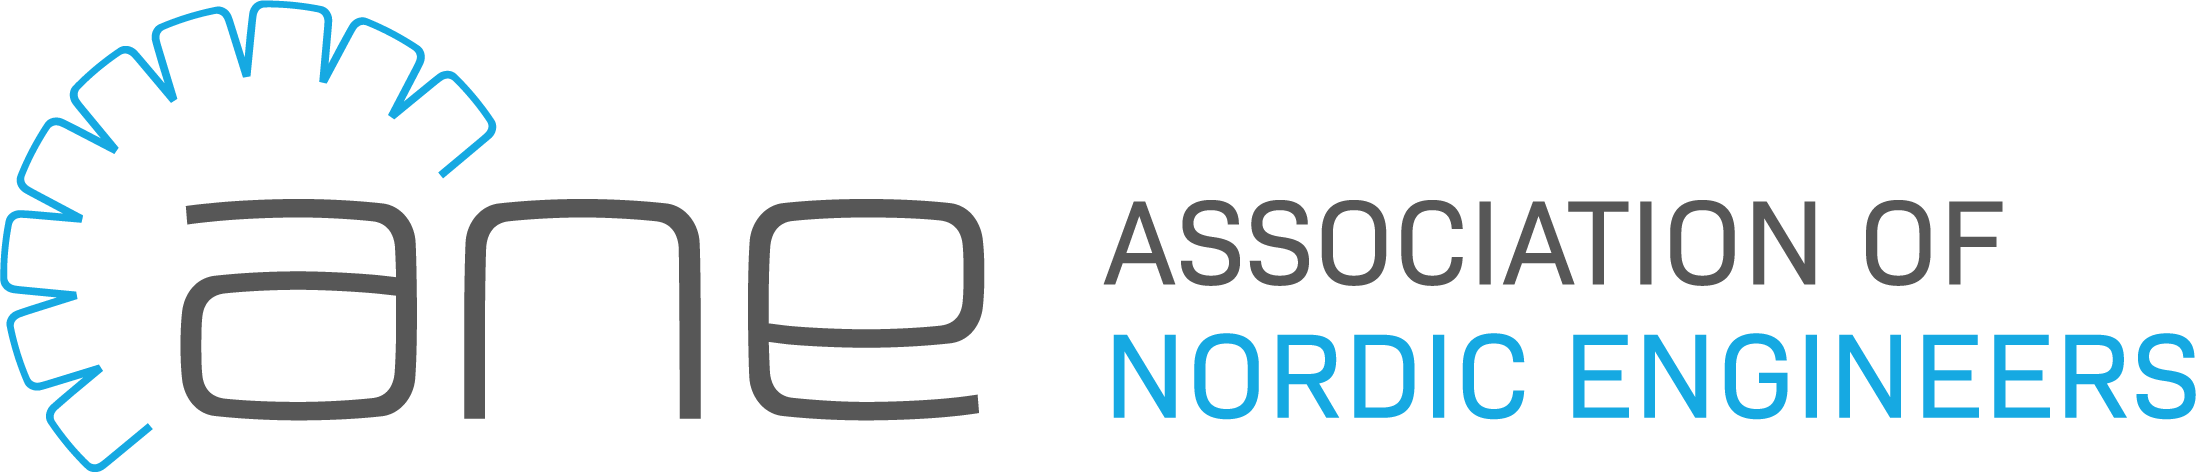 Association of Nordic Engineers